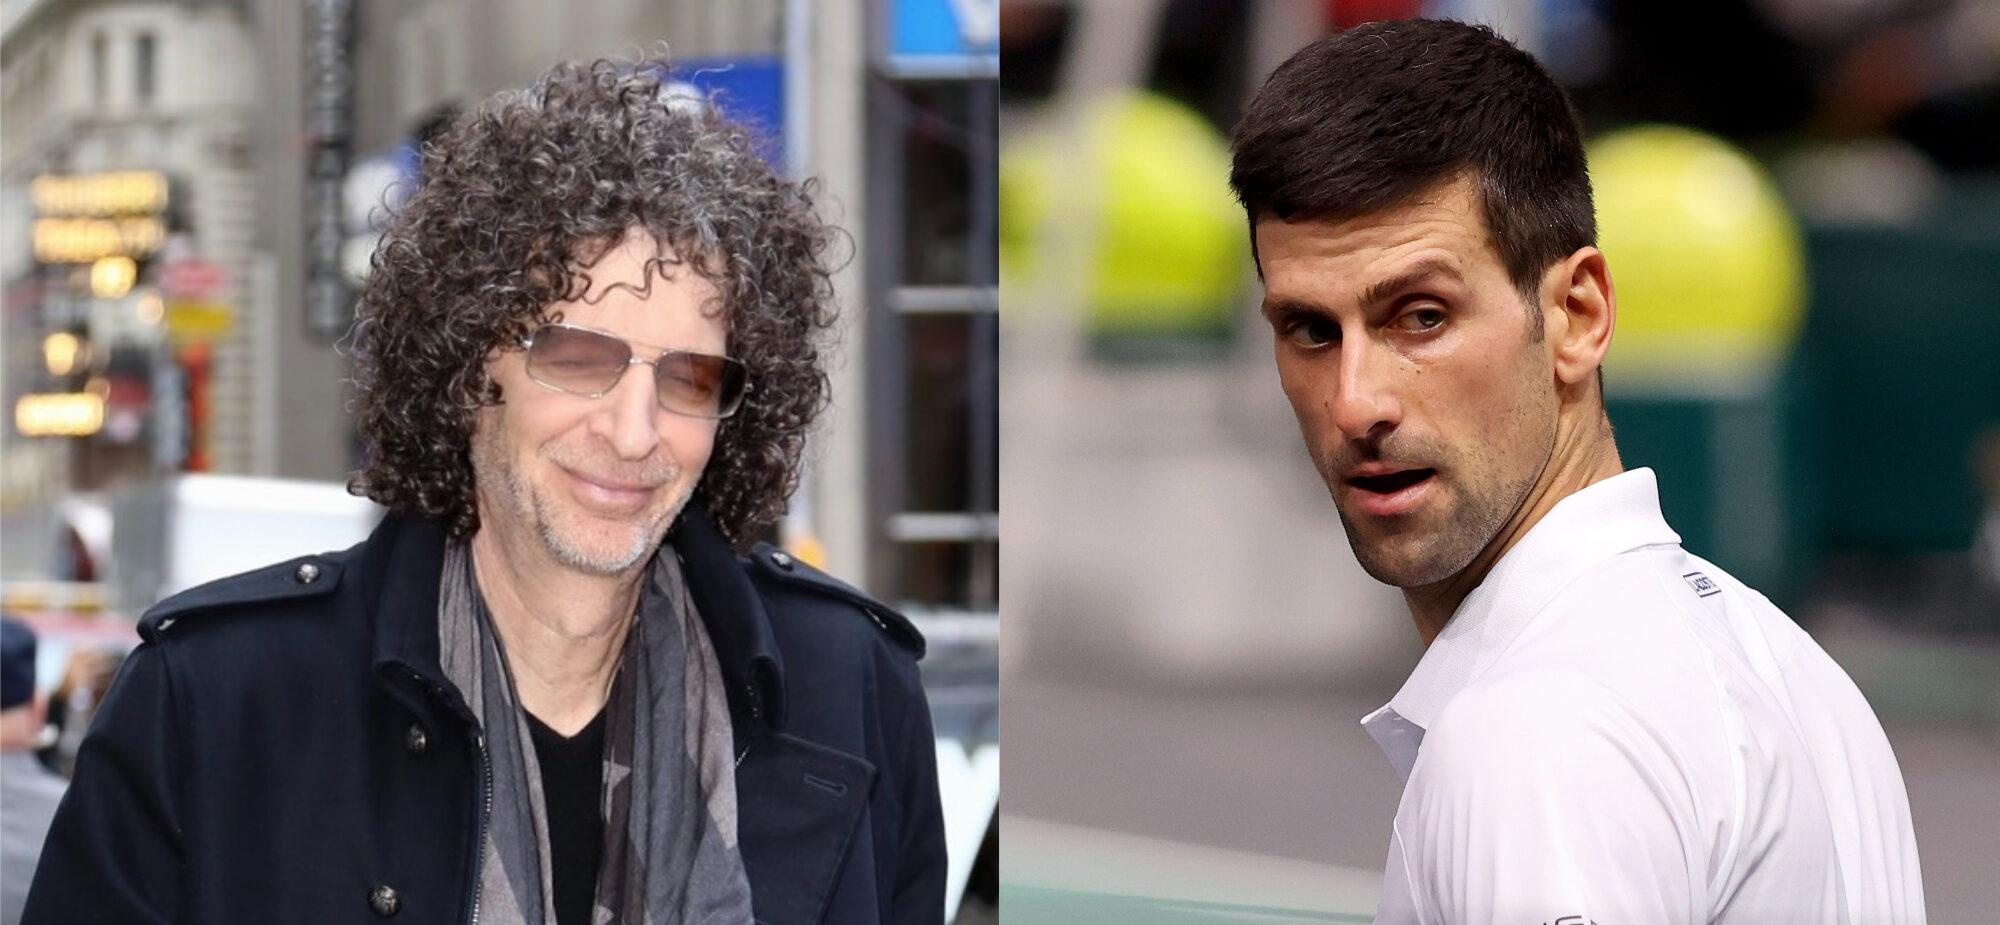 Howard Stern Calls Novak Djokovic ‘A Big Dumb Tennis Player’